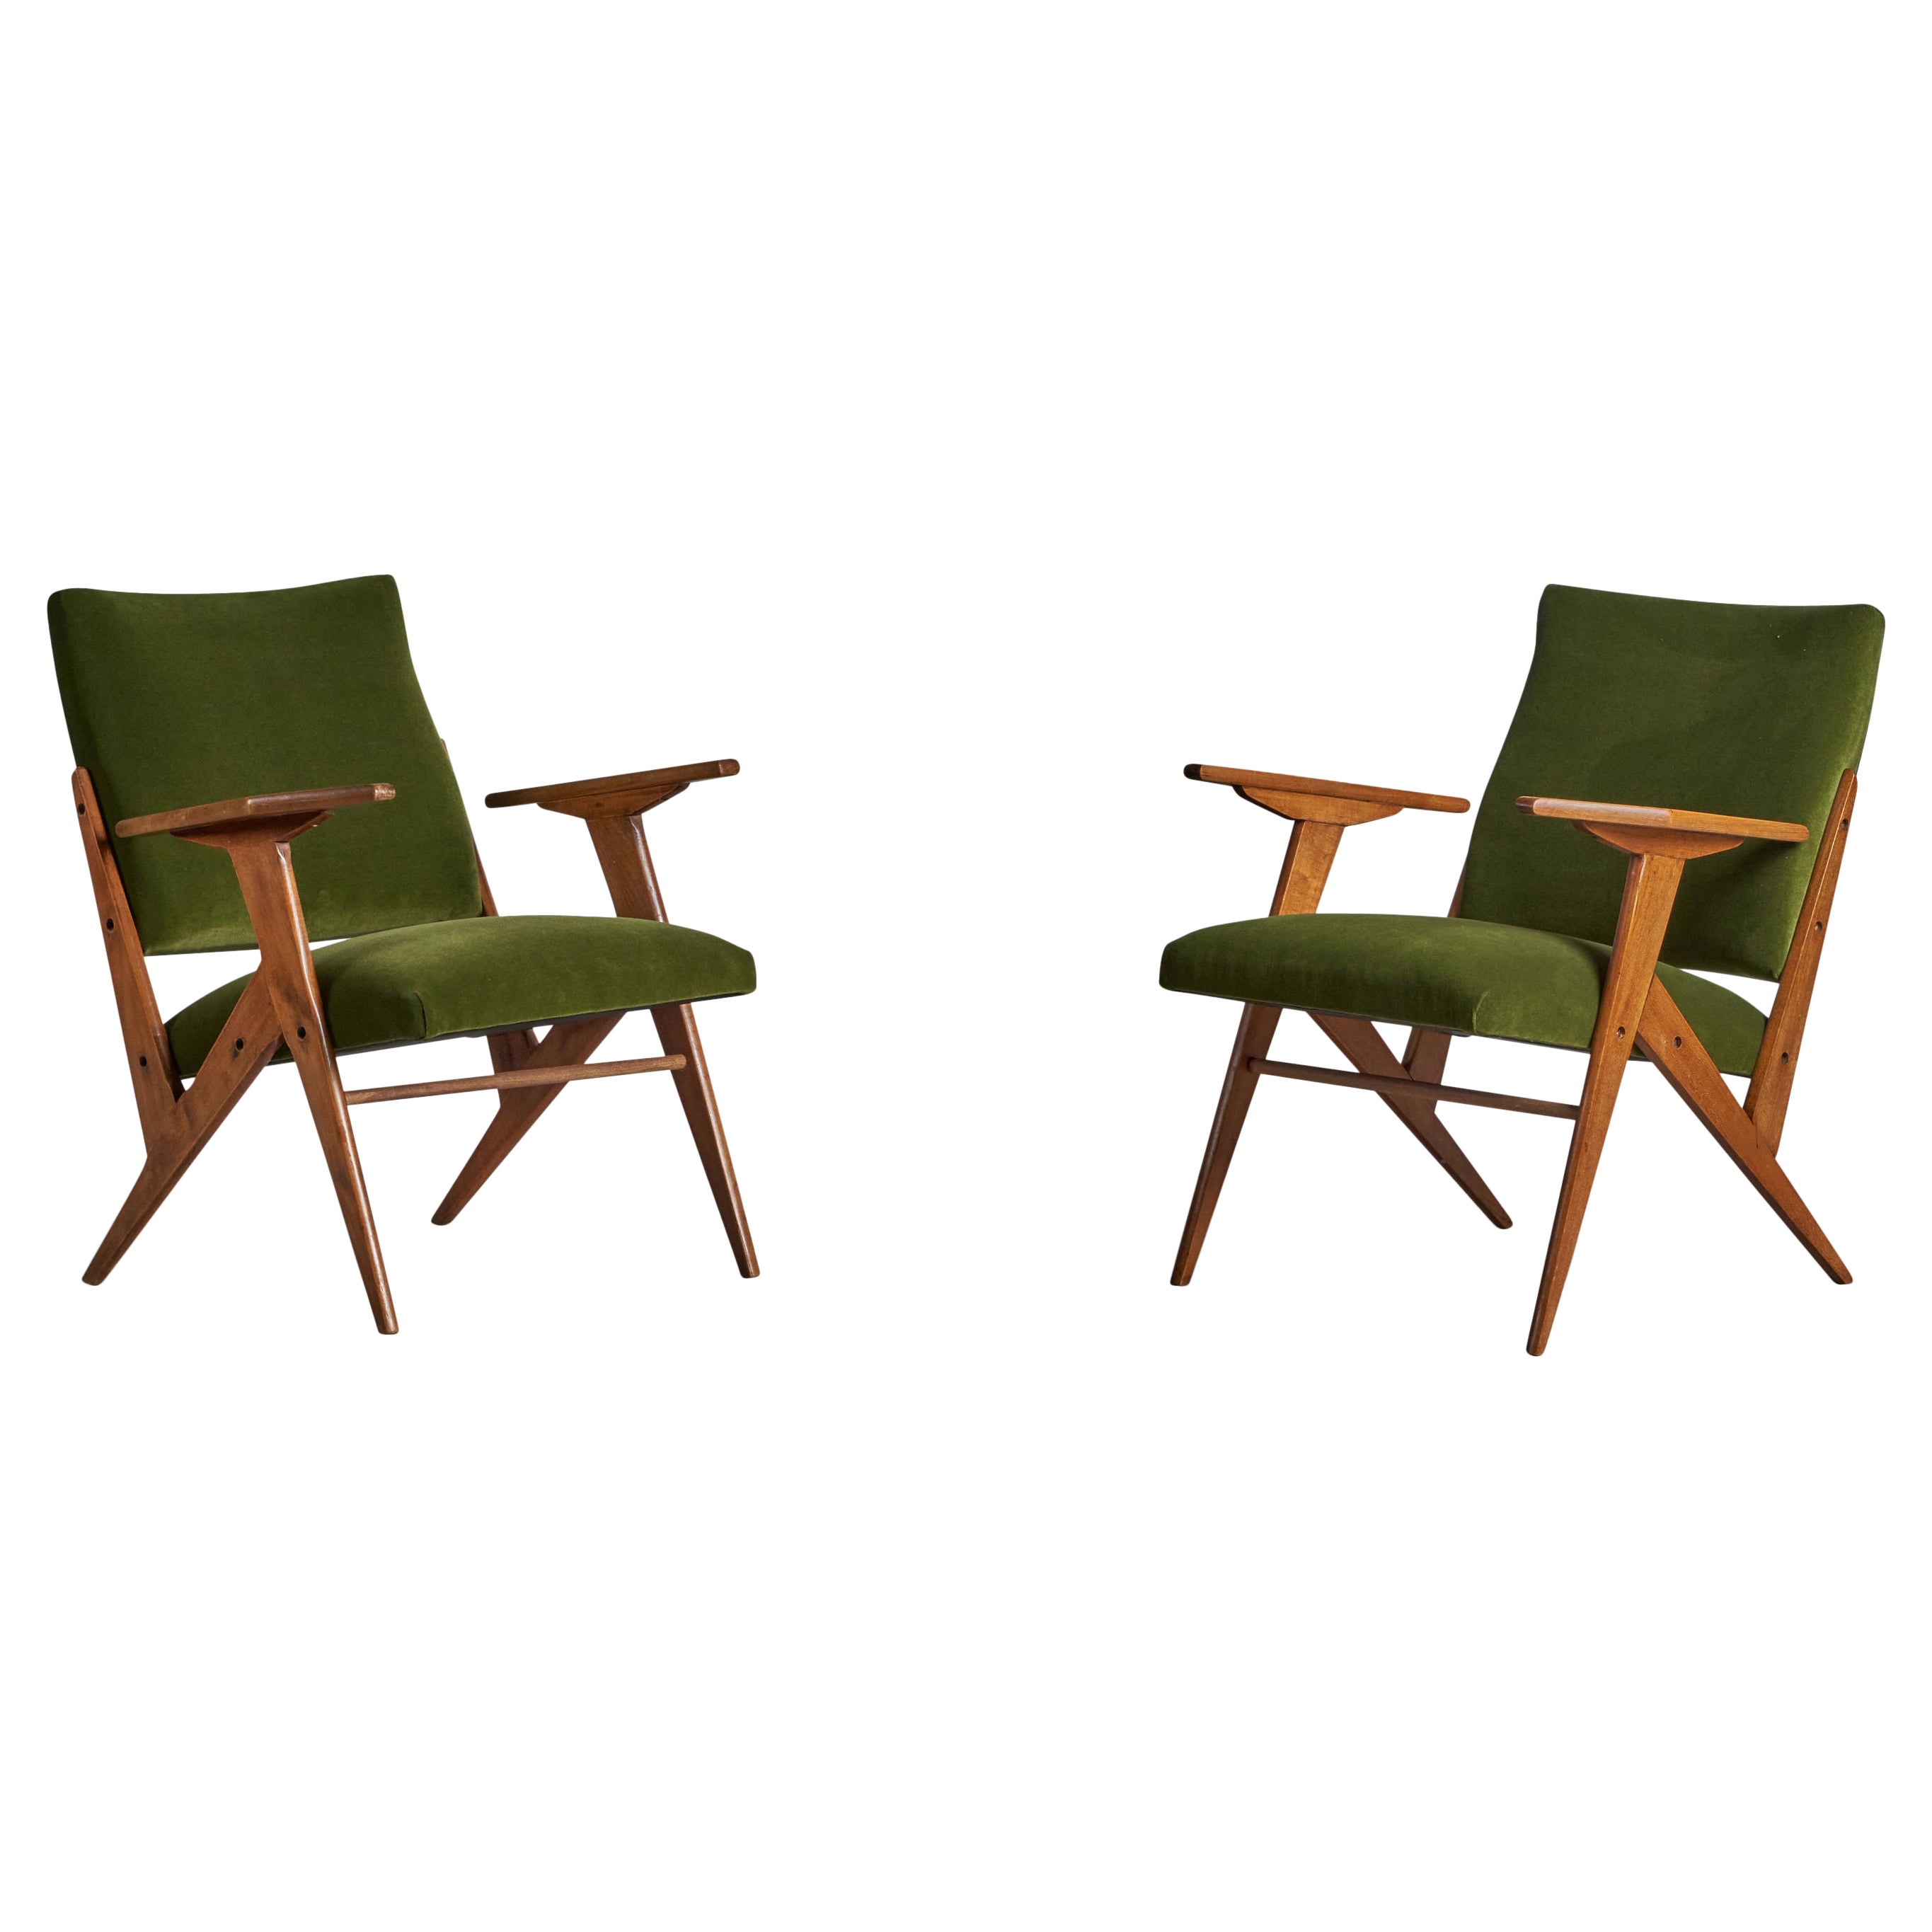 José Zanine Caldas, Lounge Chairs, Pau Marfim, Fabric, Brazil, 1950s